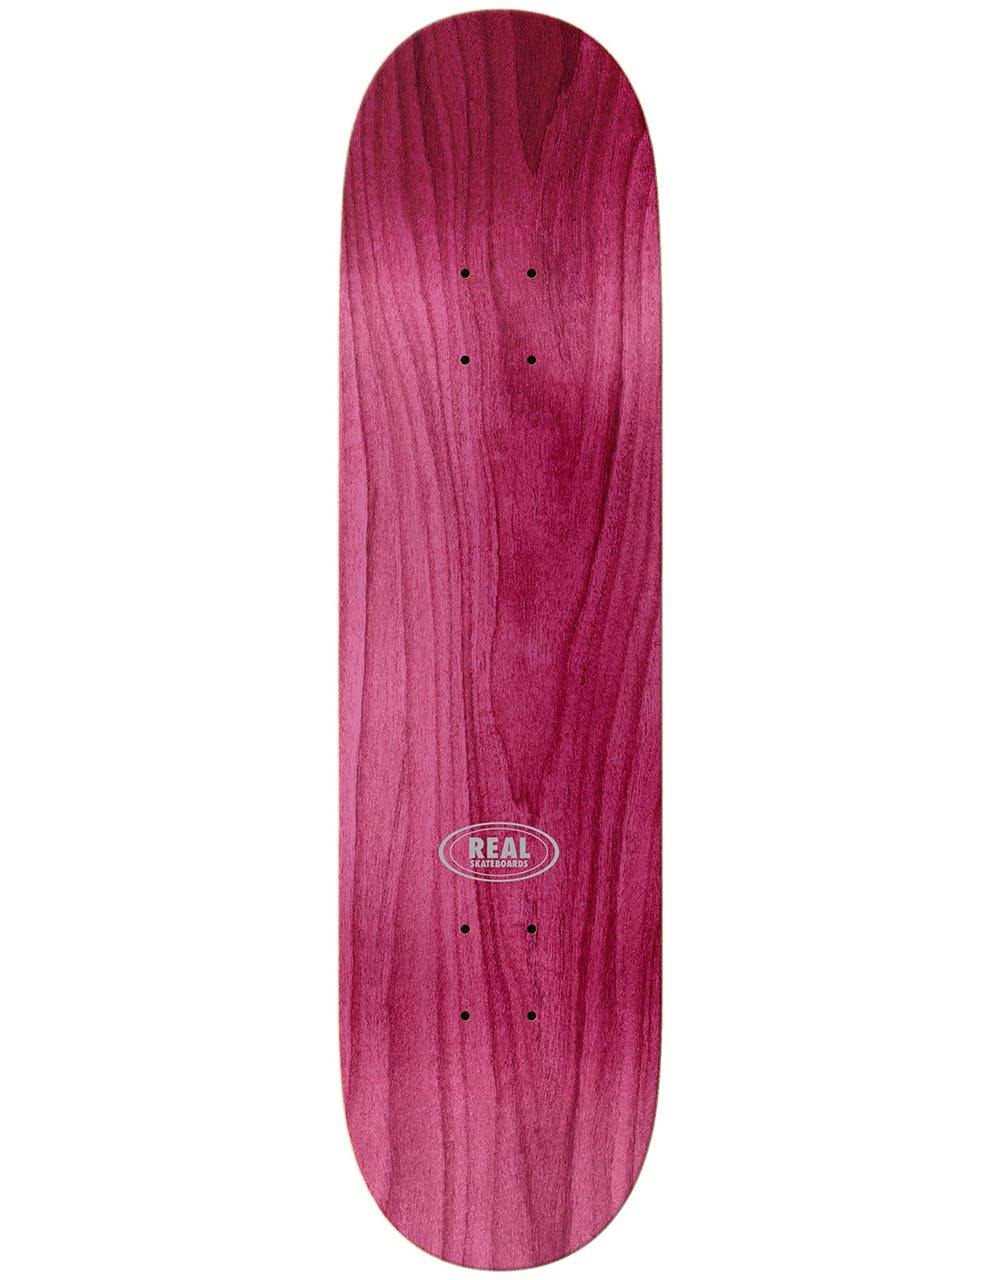 Real Kyle Eclipse Ltd II Skateboard Deck - 8.06"